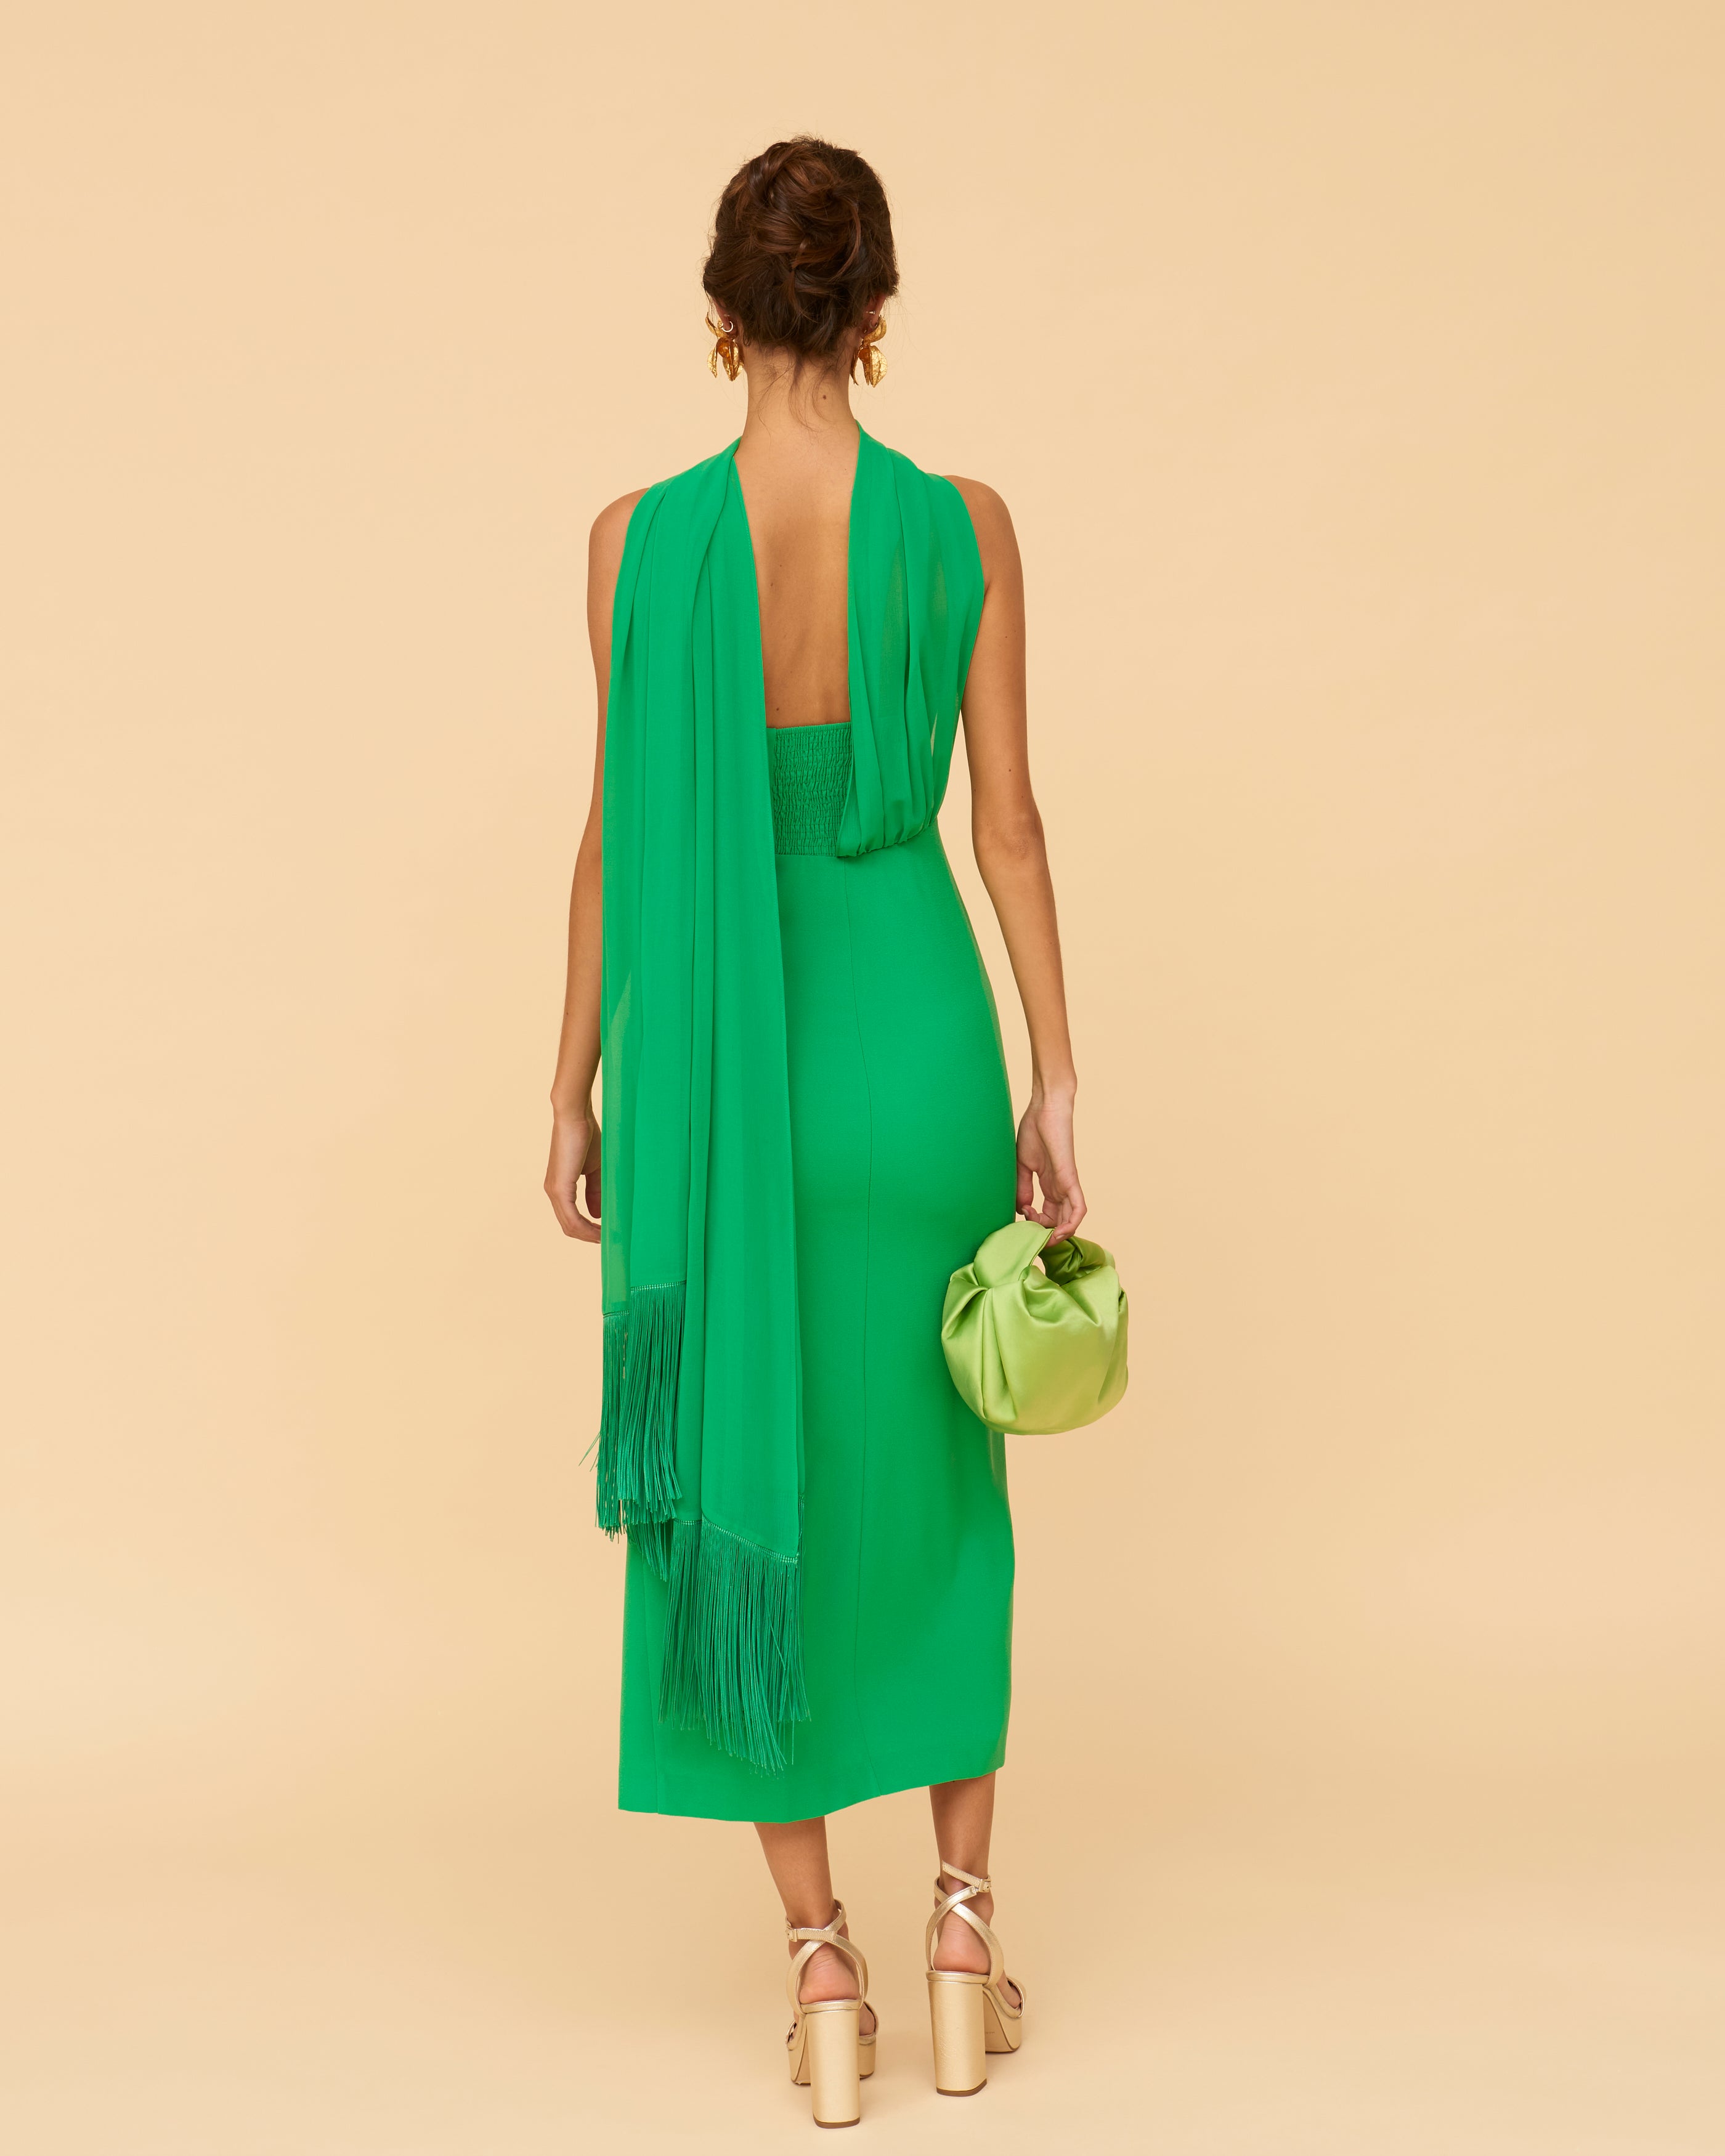 Lyretta Green Dress